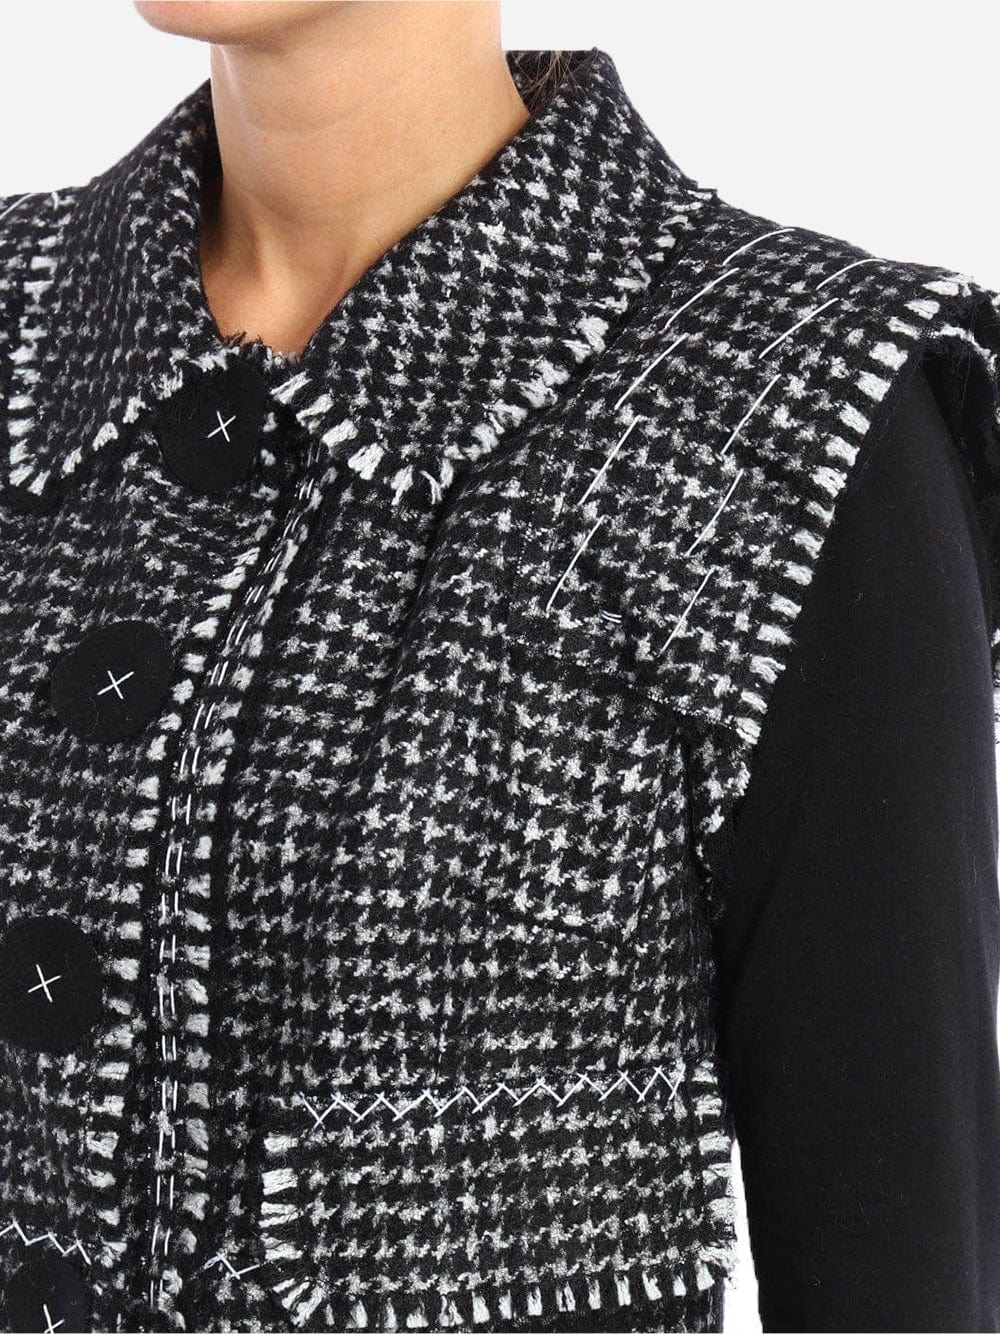 Dolce & Gabbana Wool Blend Sleeveless Jacket